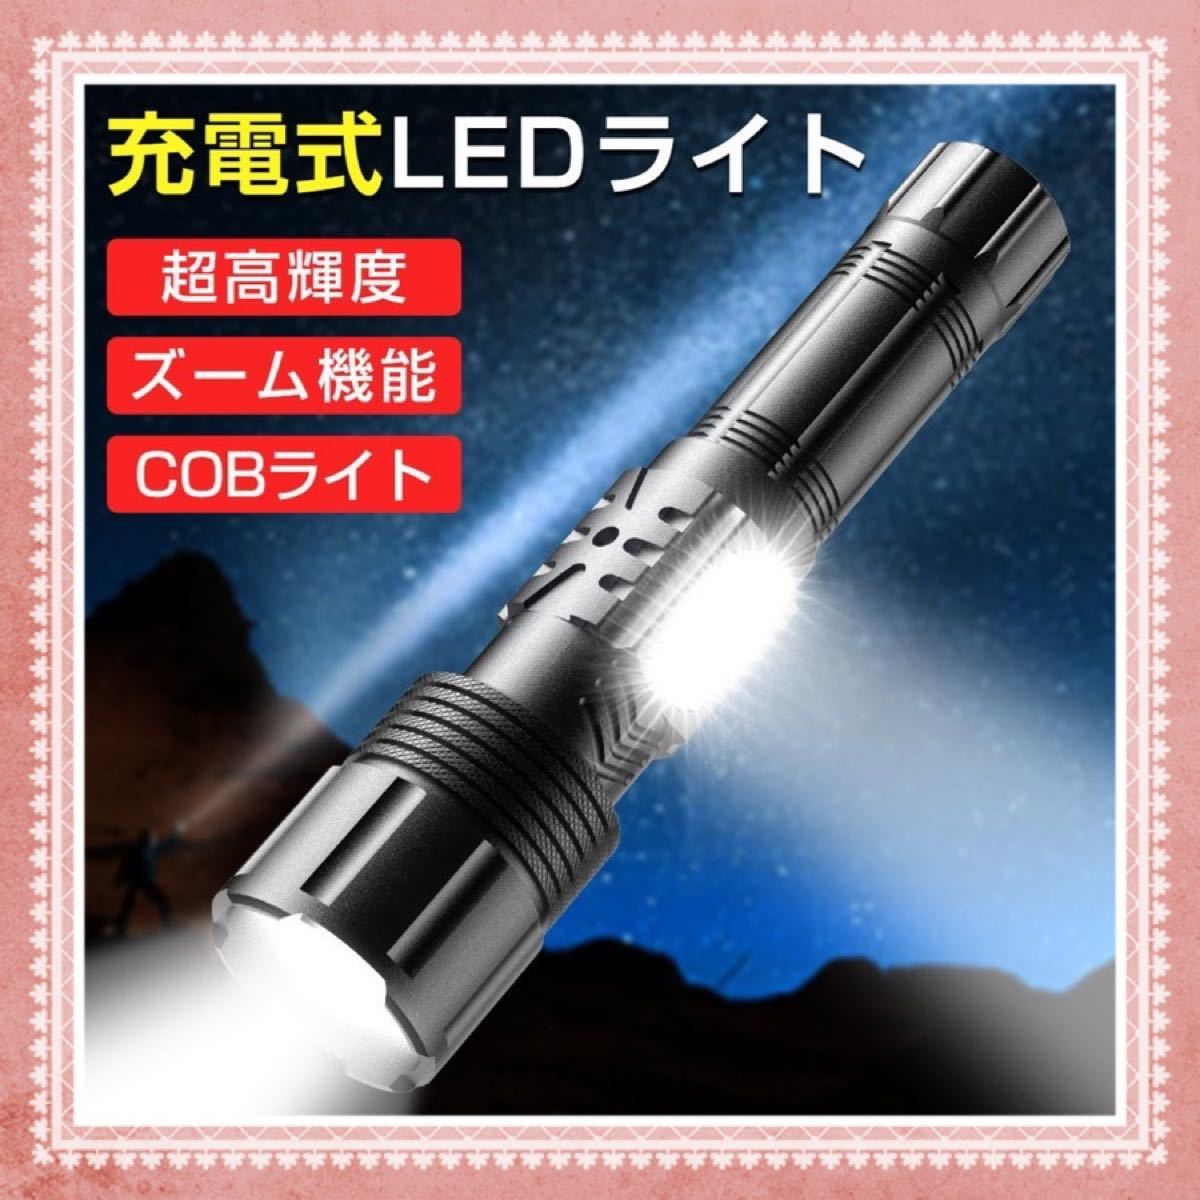 LED懐中電灯 ハンディライト  超高輝度 USB充電 IPX67防水 防災対策